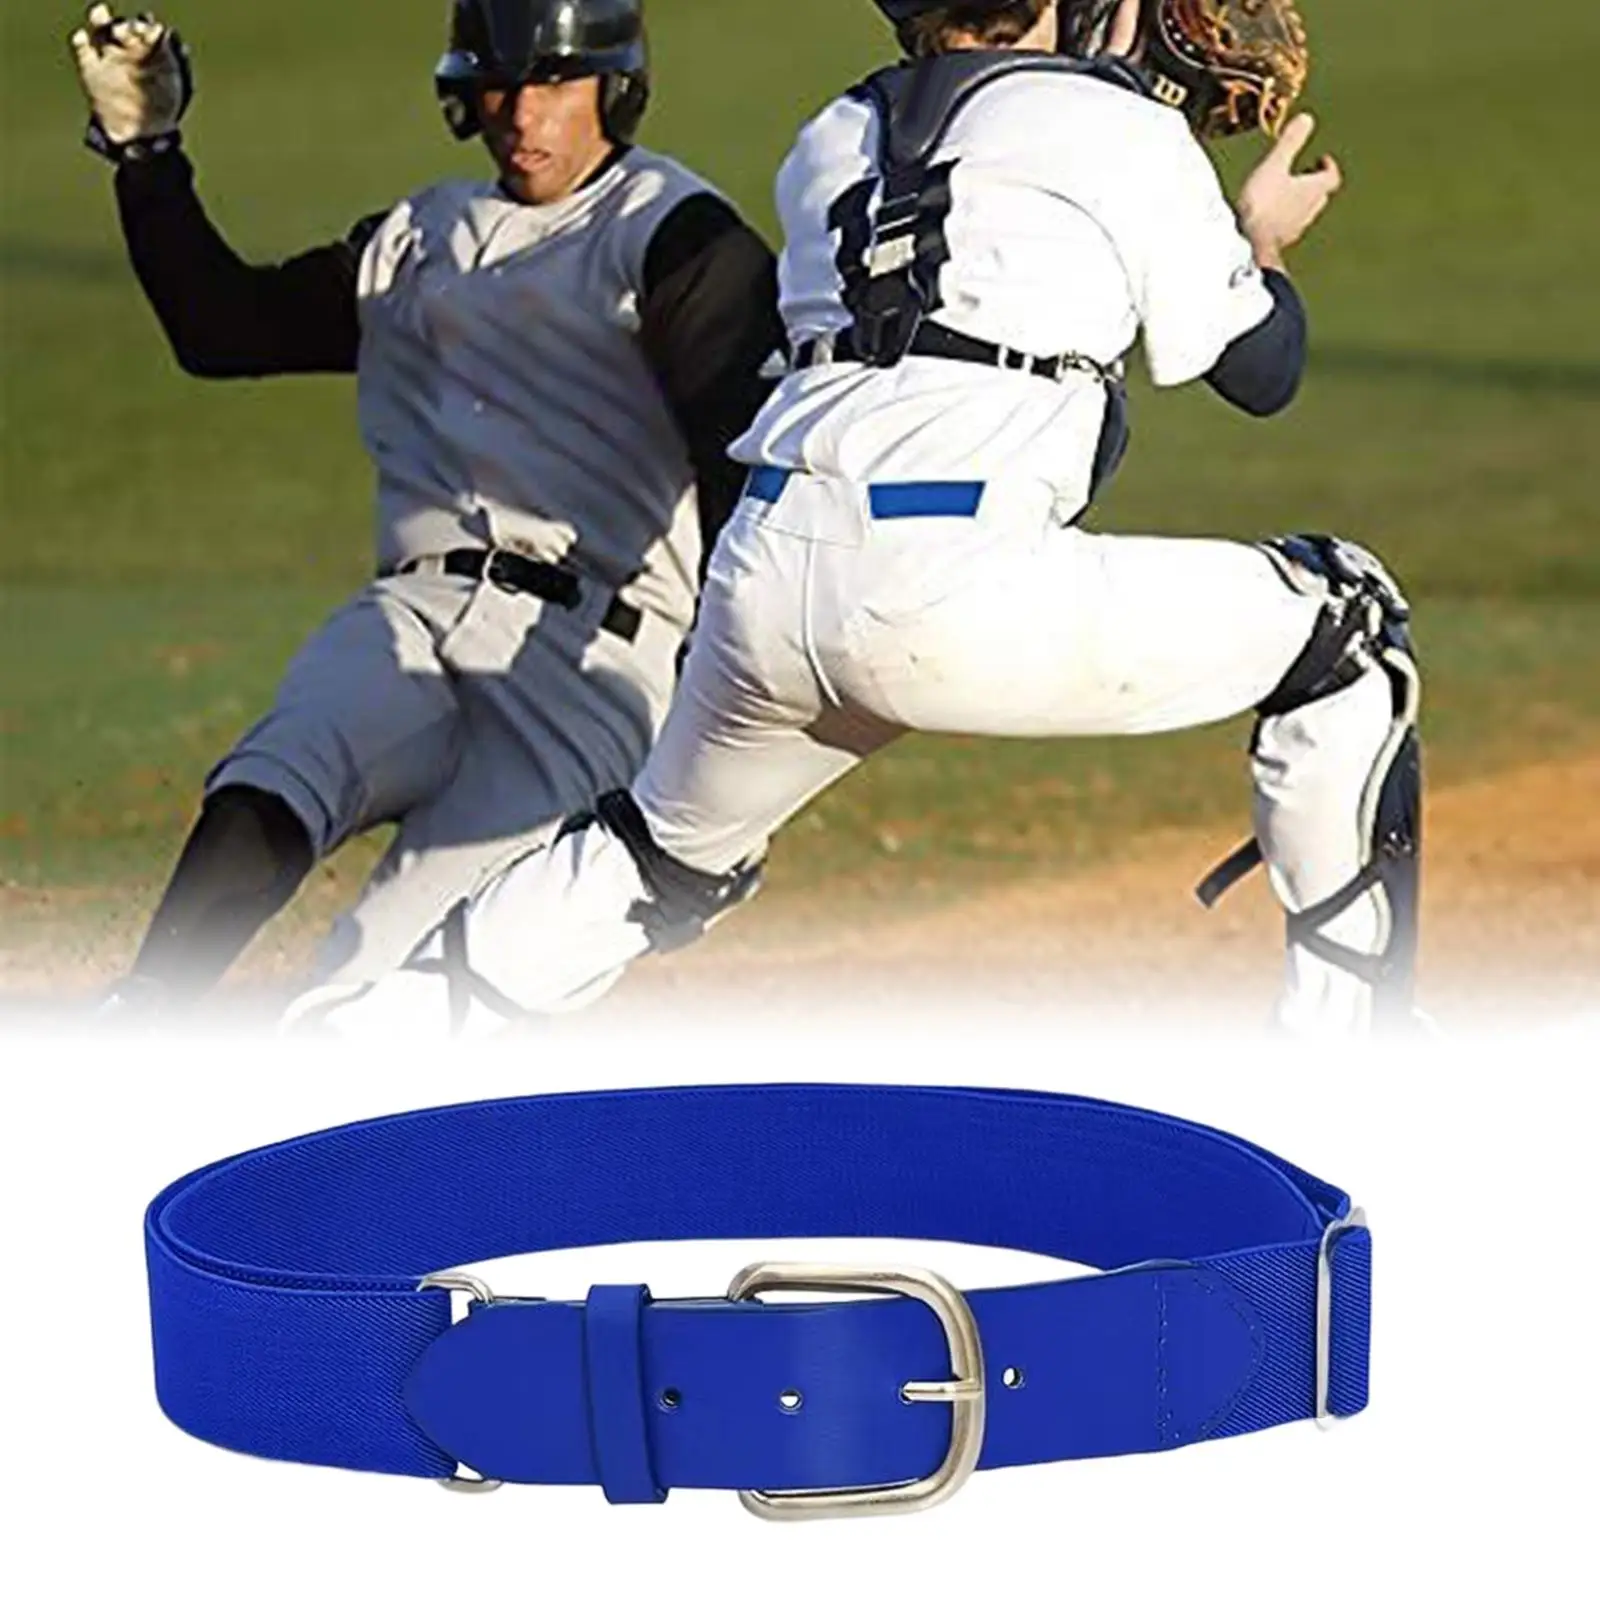 Baseball Belt Softball Belt Waistband for Women or Men Versatile Clothes Accessory Flexible Comfortable Buckle Closure Durable